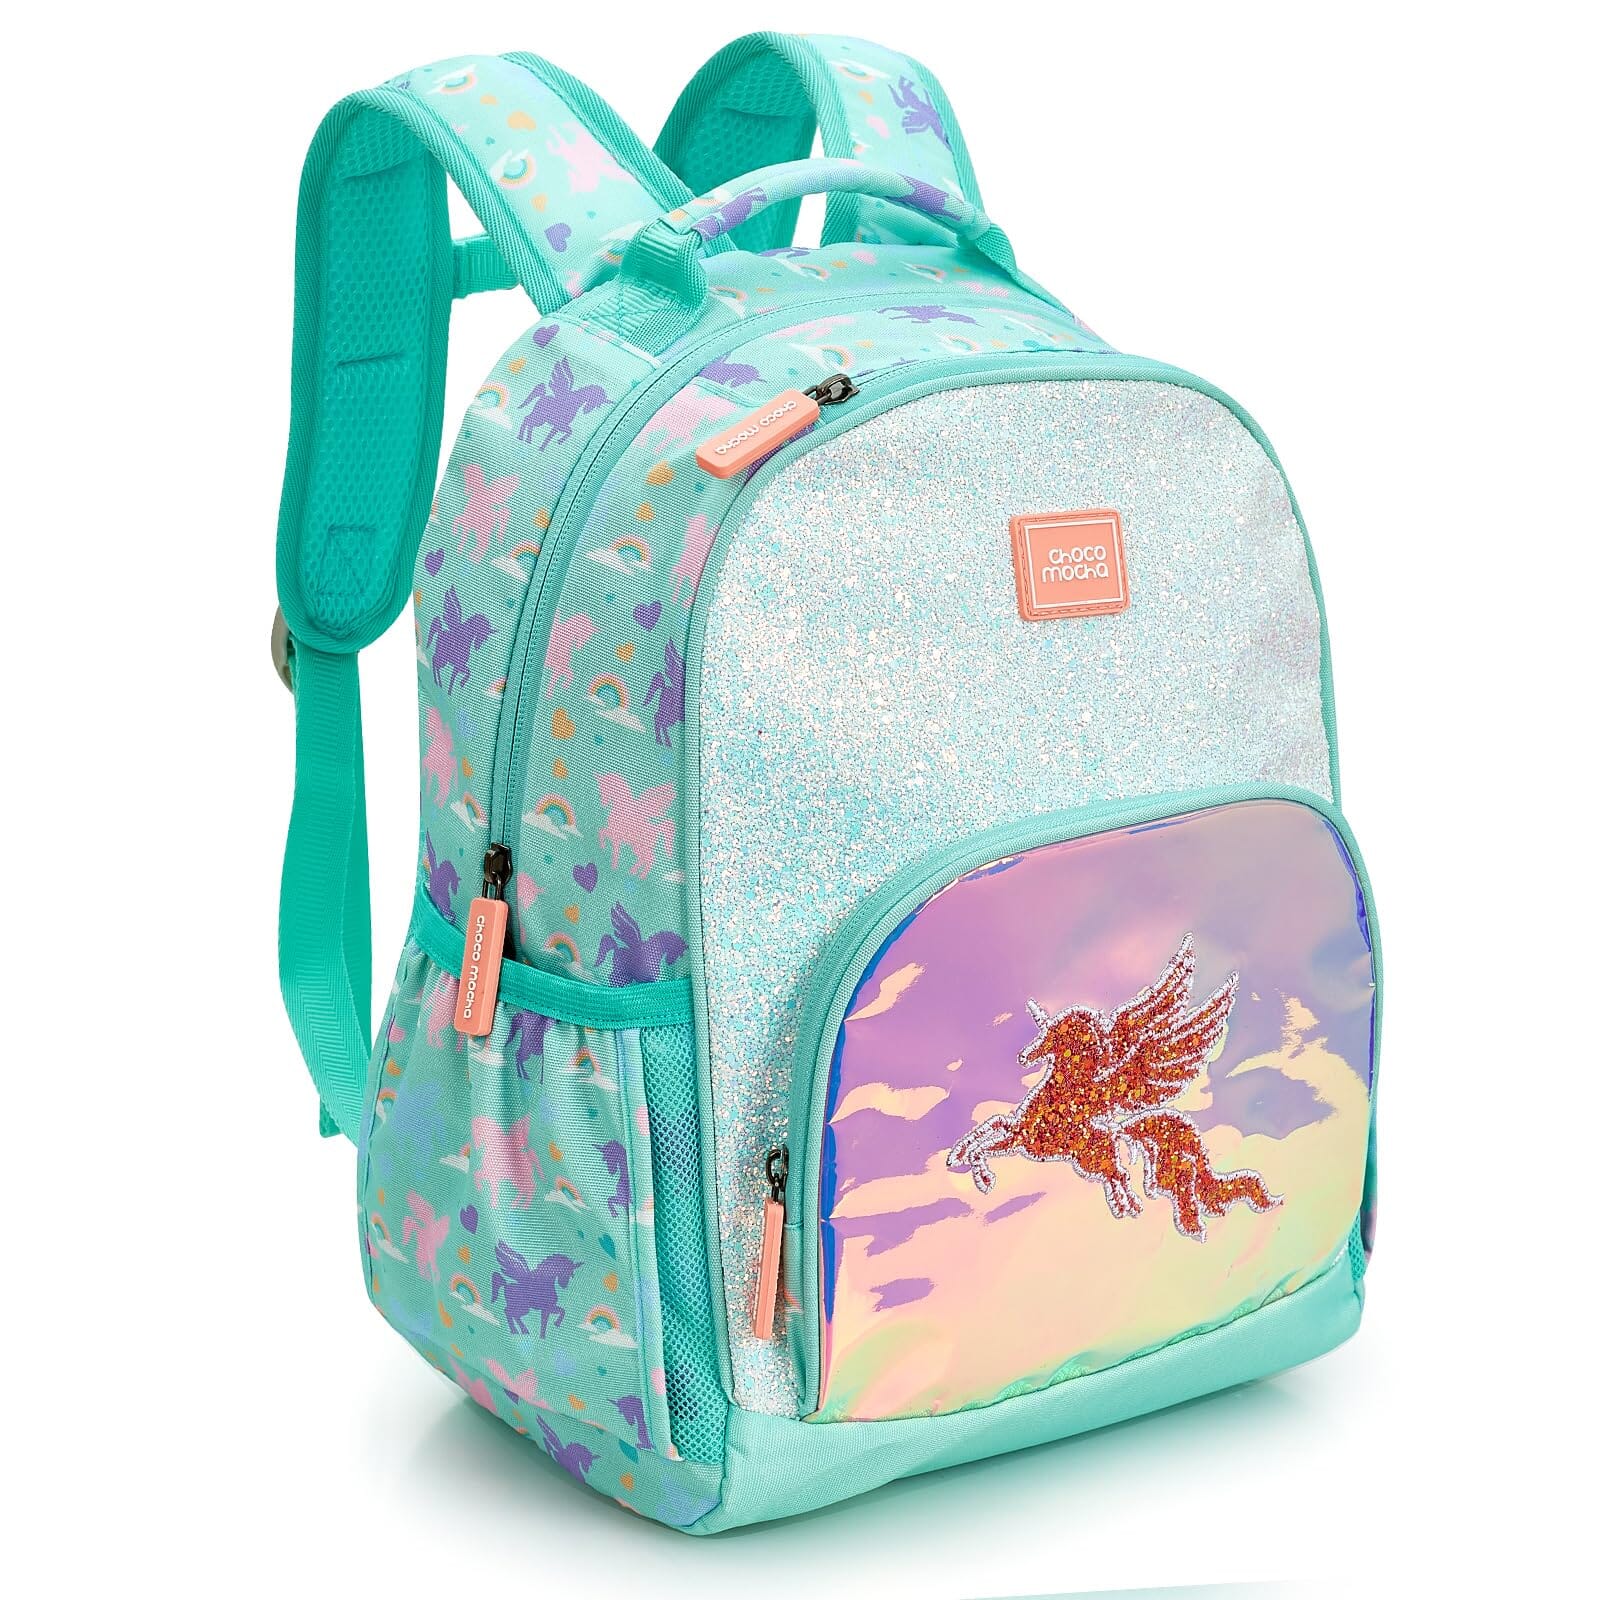 Choco Mocha Unicorn Toddler Backpack for Girls, Kids Preschool Backpack for Toddler Kindergarten Backpack 15 Inch, Glitter Teal Green chocomochakids 